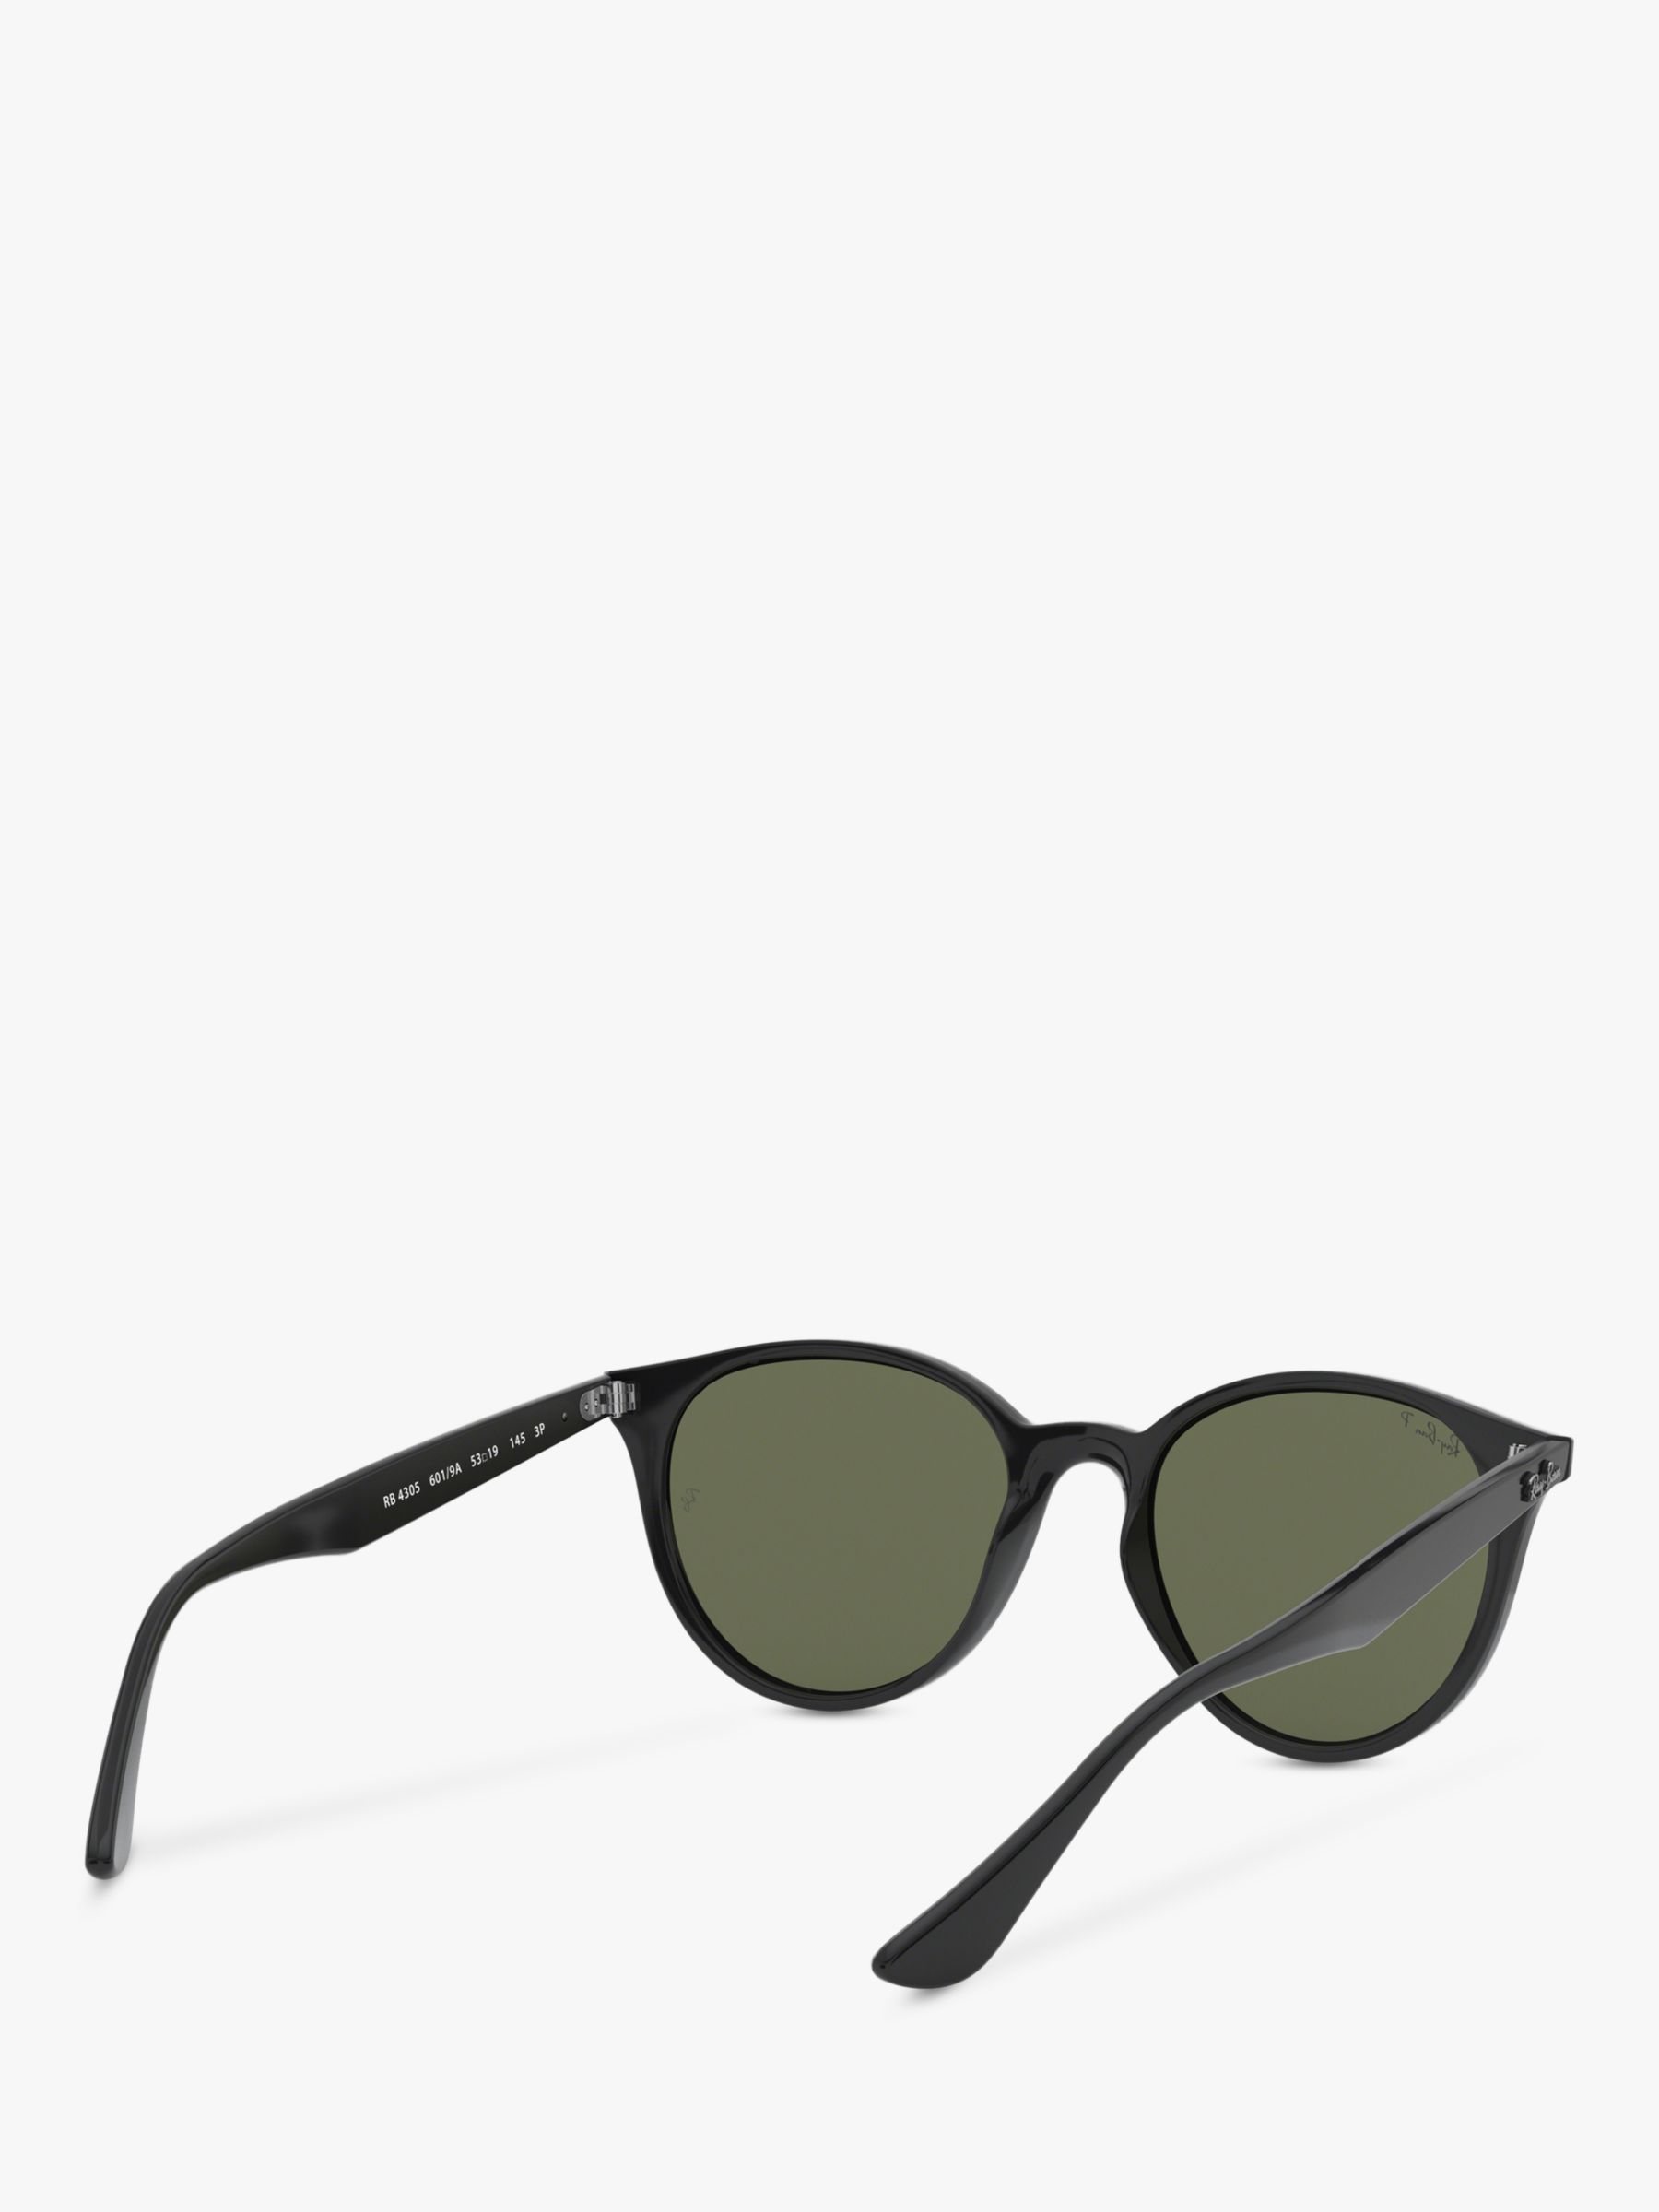 Ray-Ban RB4305 Unisex Polarised Sunglasses, Black/Green